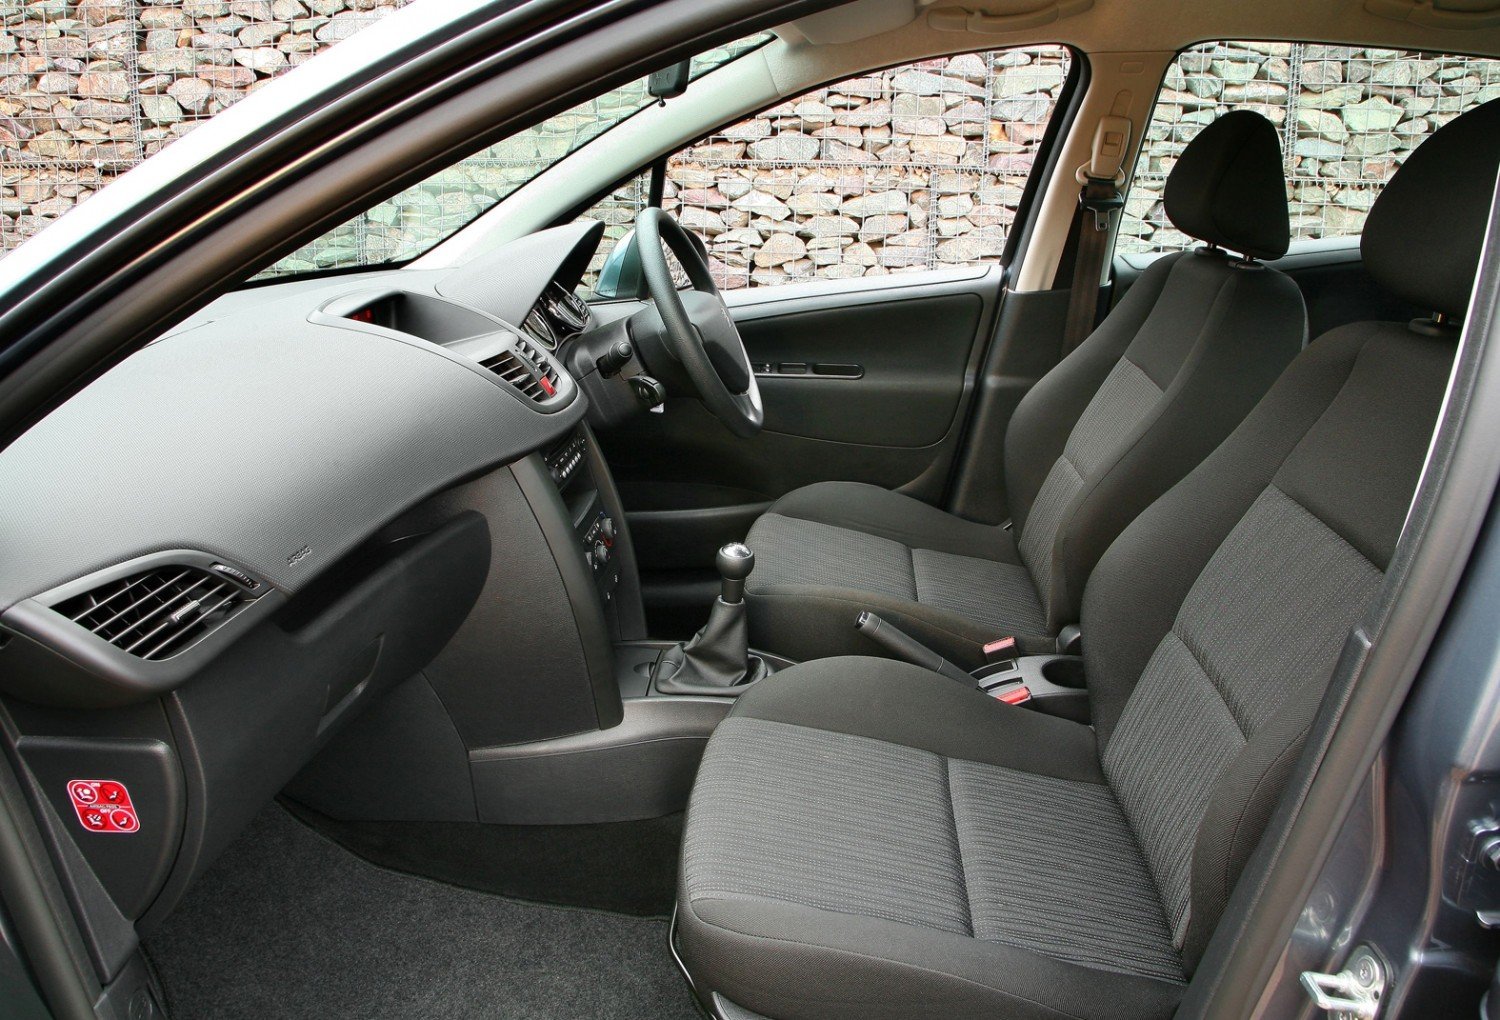 Peugeot 207 interior - Seats